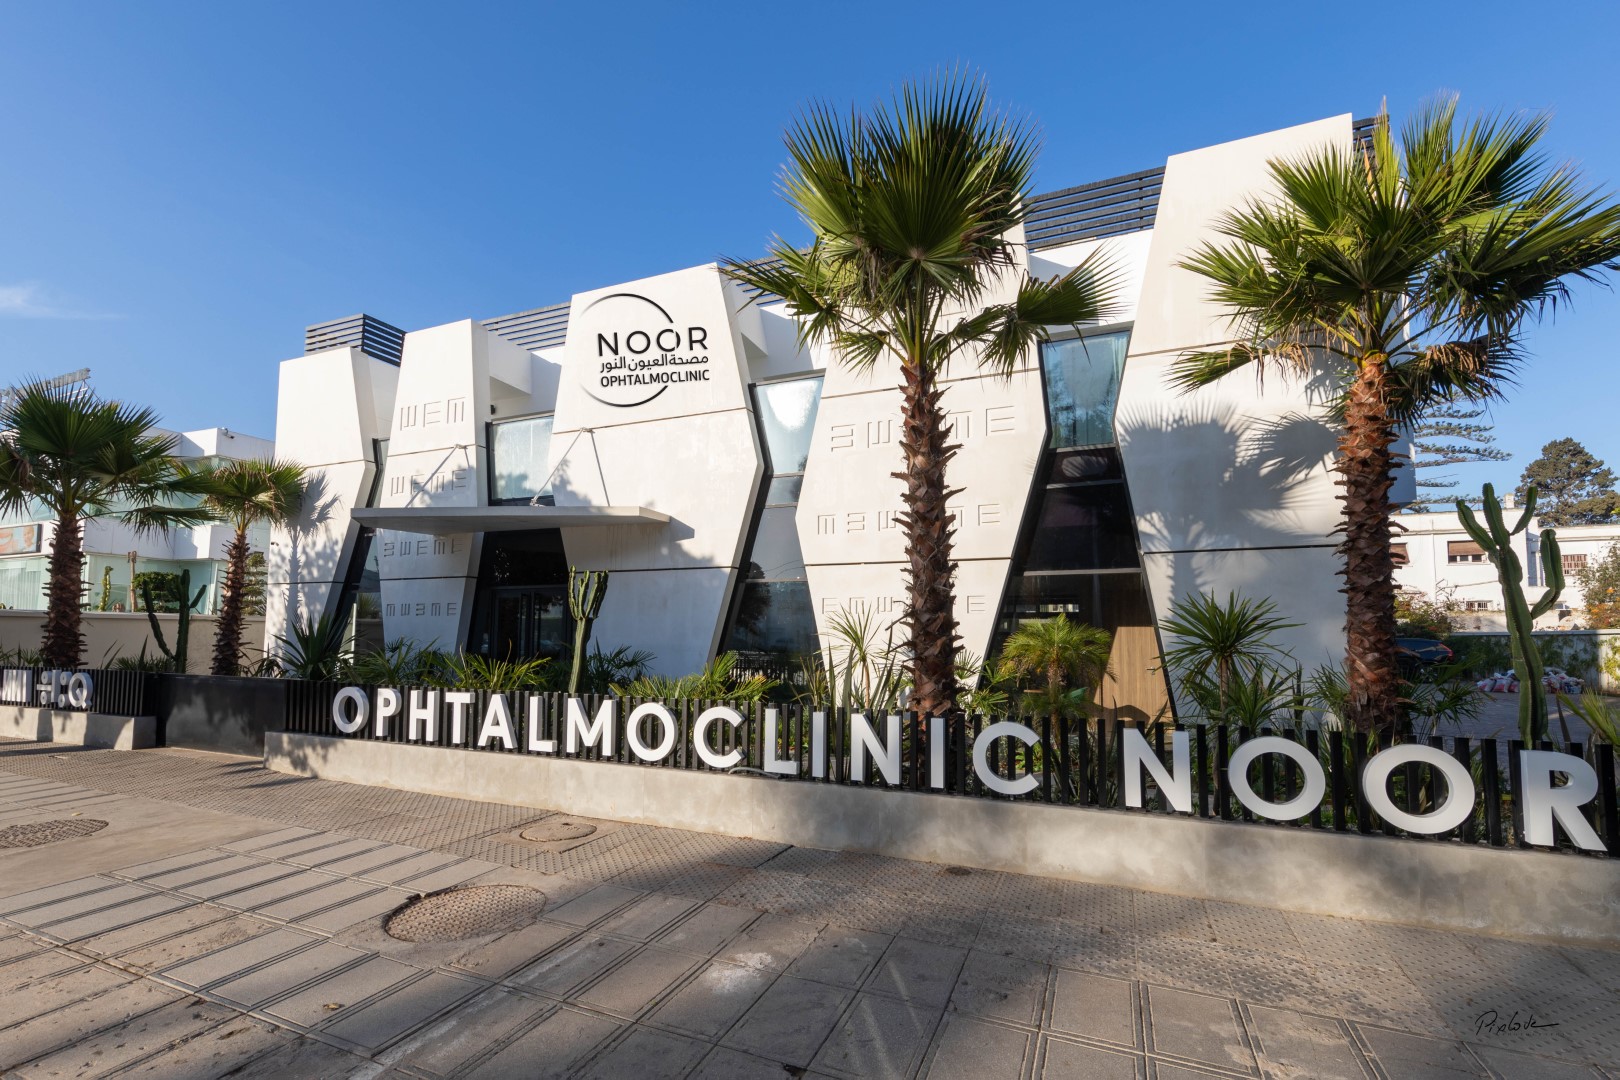 OphtalmoClinic Noor